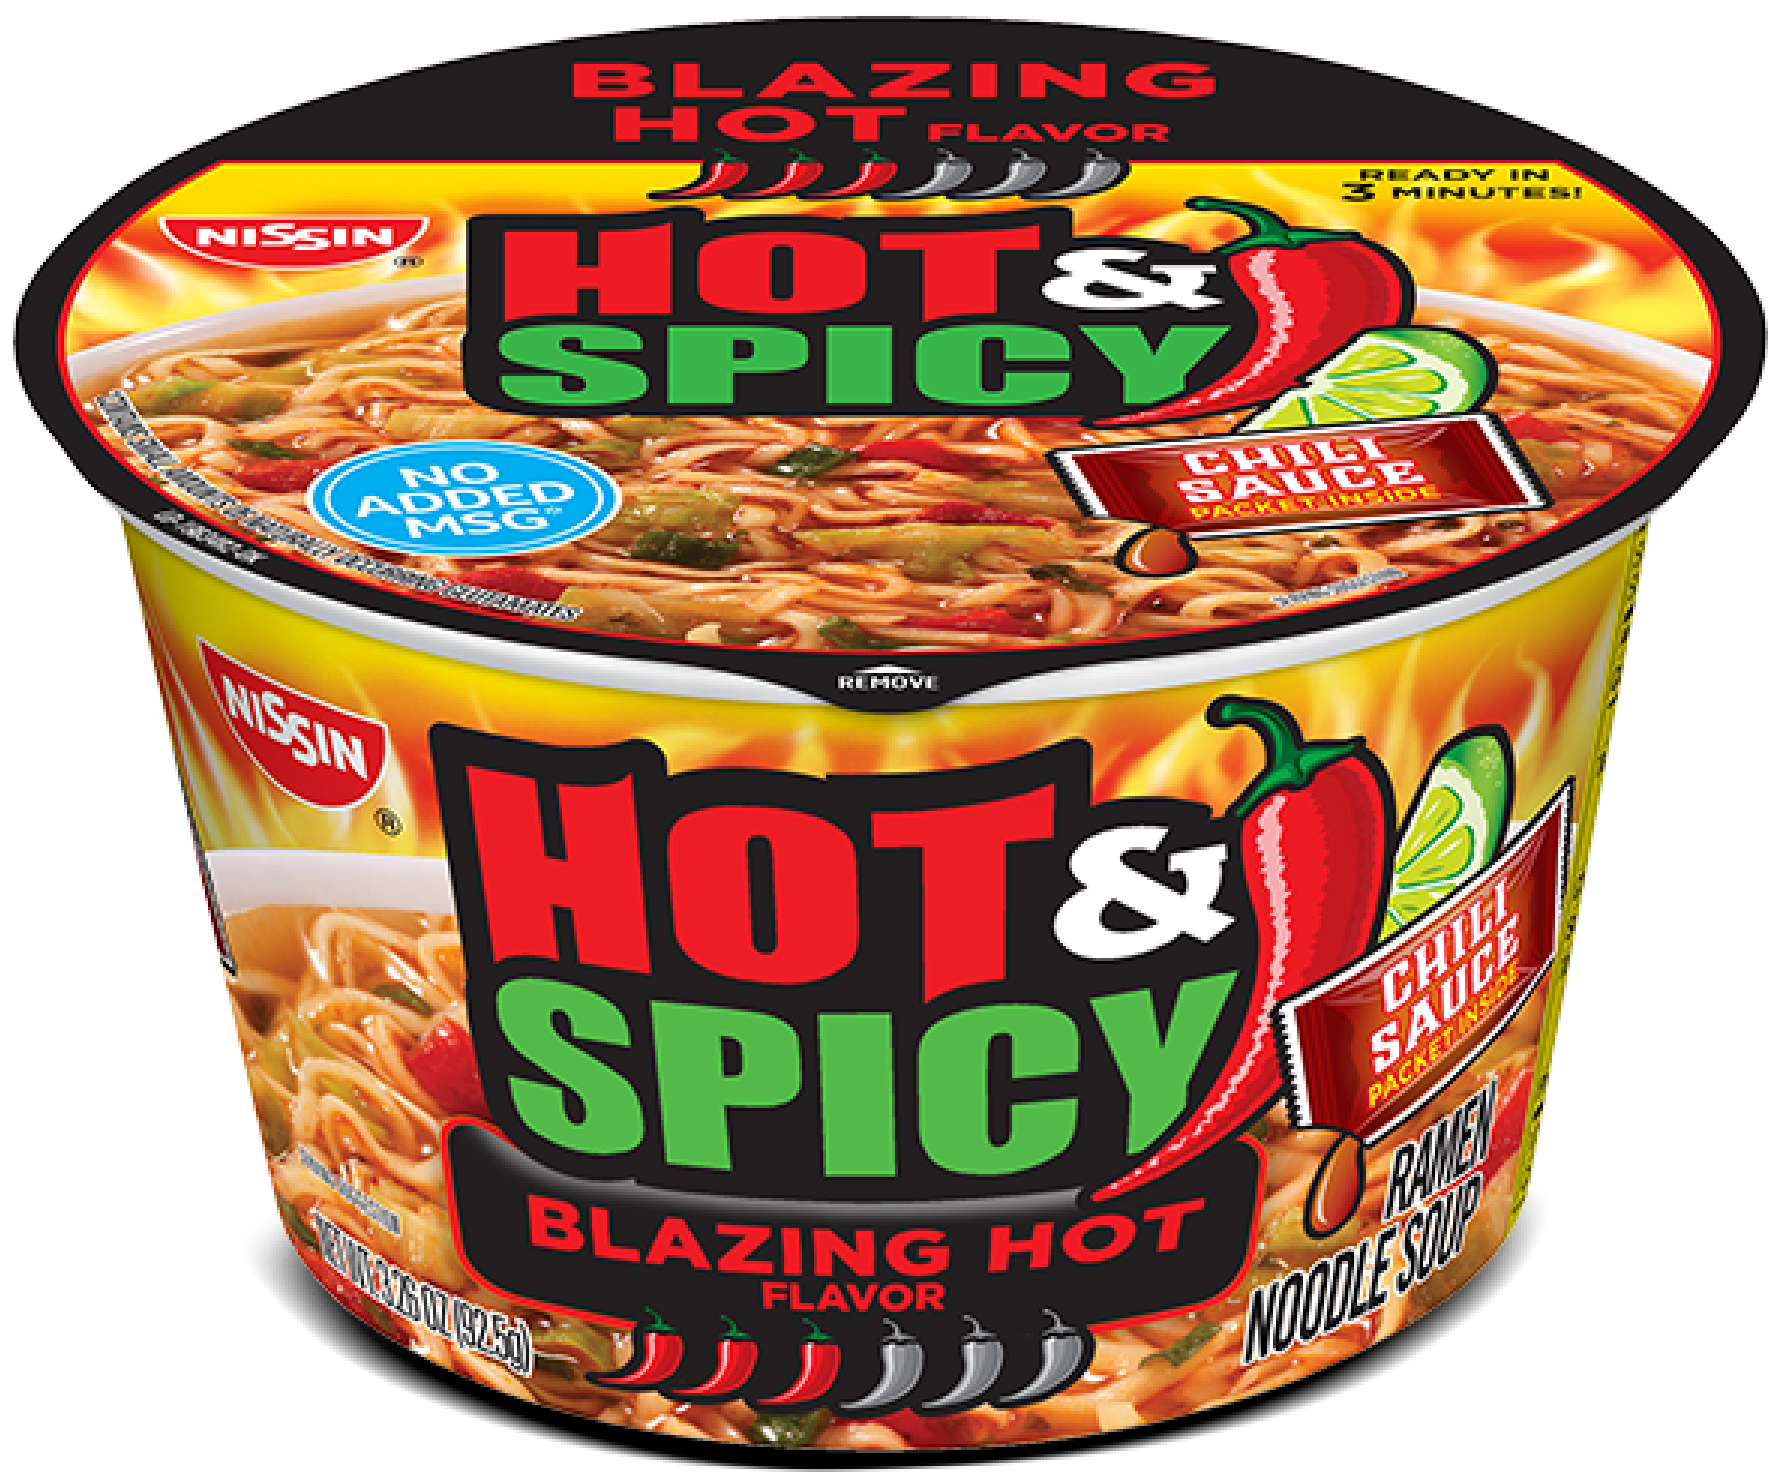 Hot & Spicy Blazing Hot